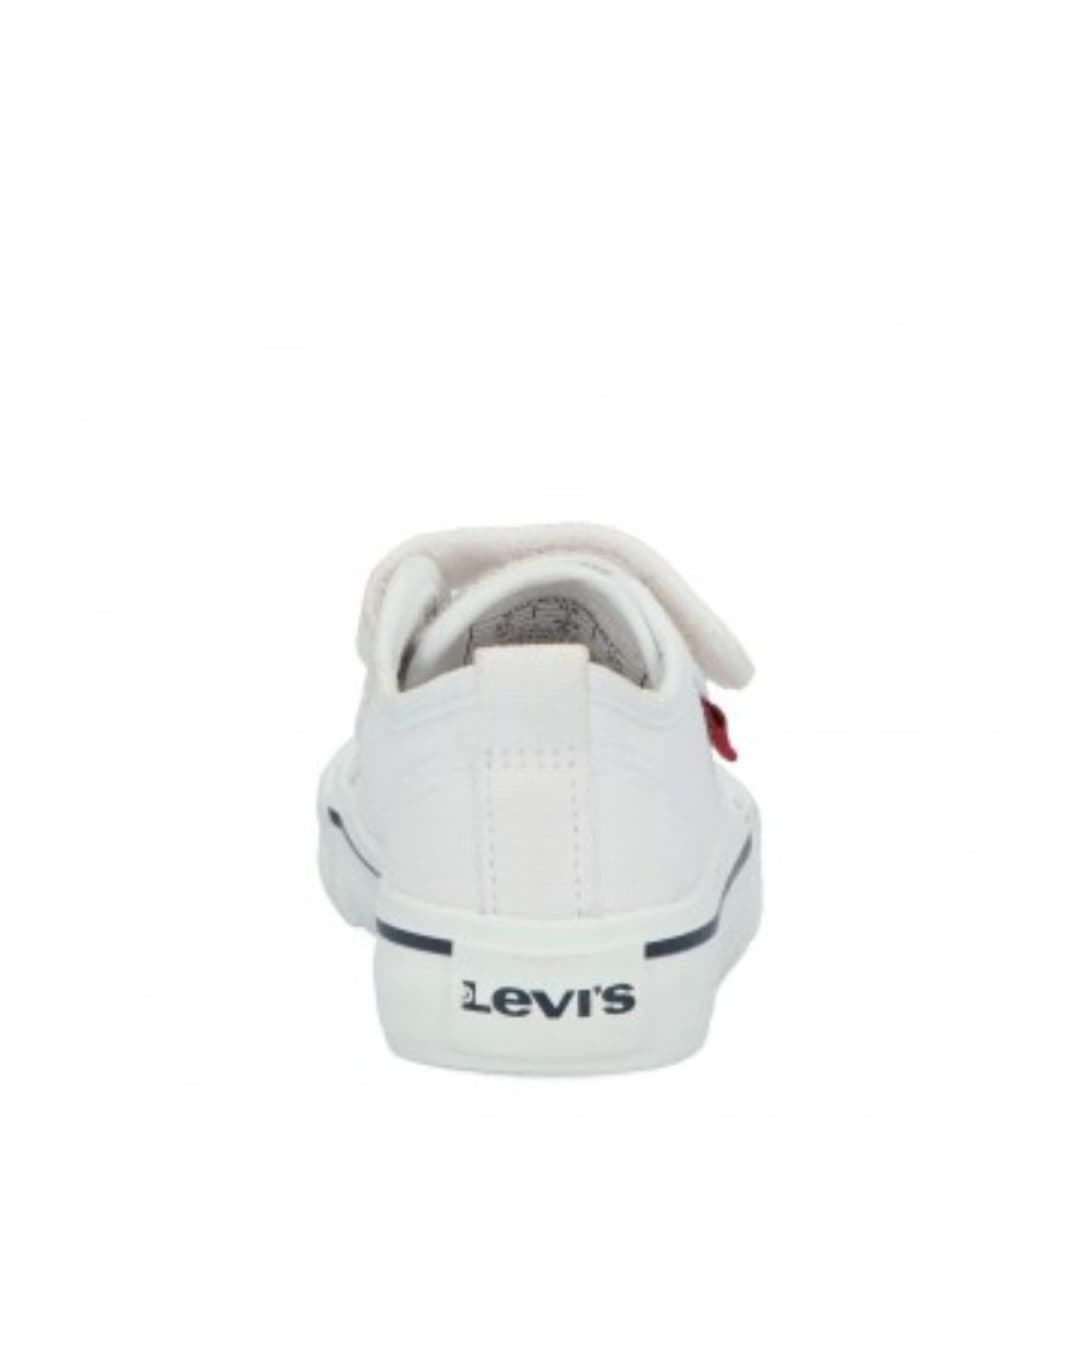 Levi's Unisex White Canvas Sneakers Kids - Image 3